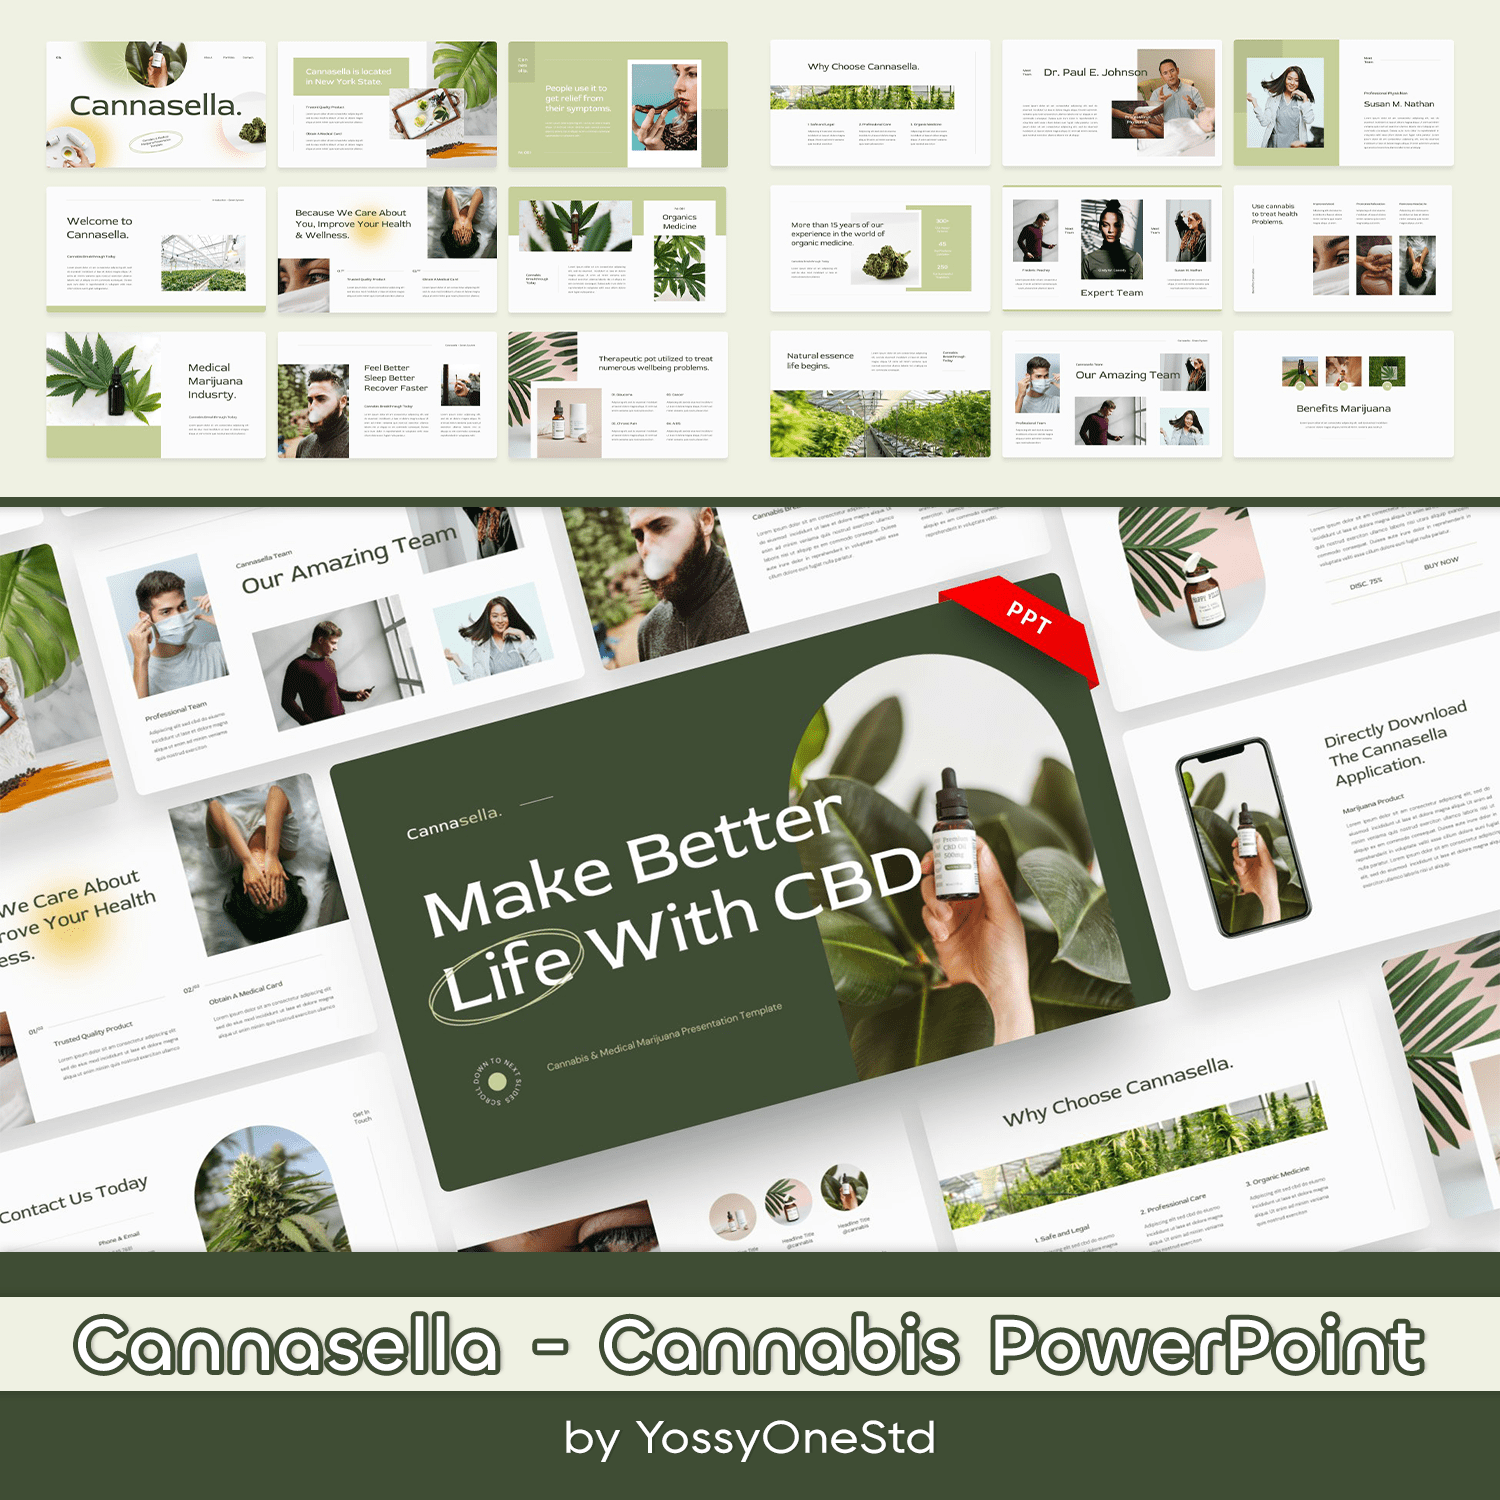 Cannasella - Cannabis PowerPoint cover.